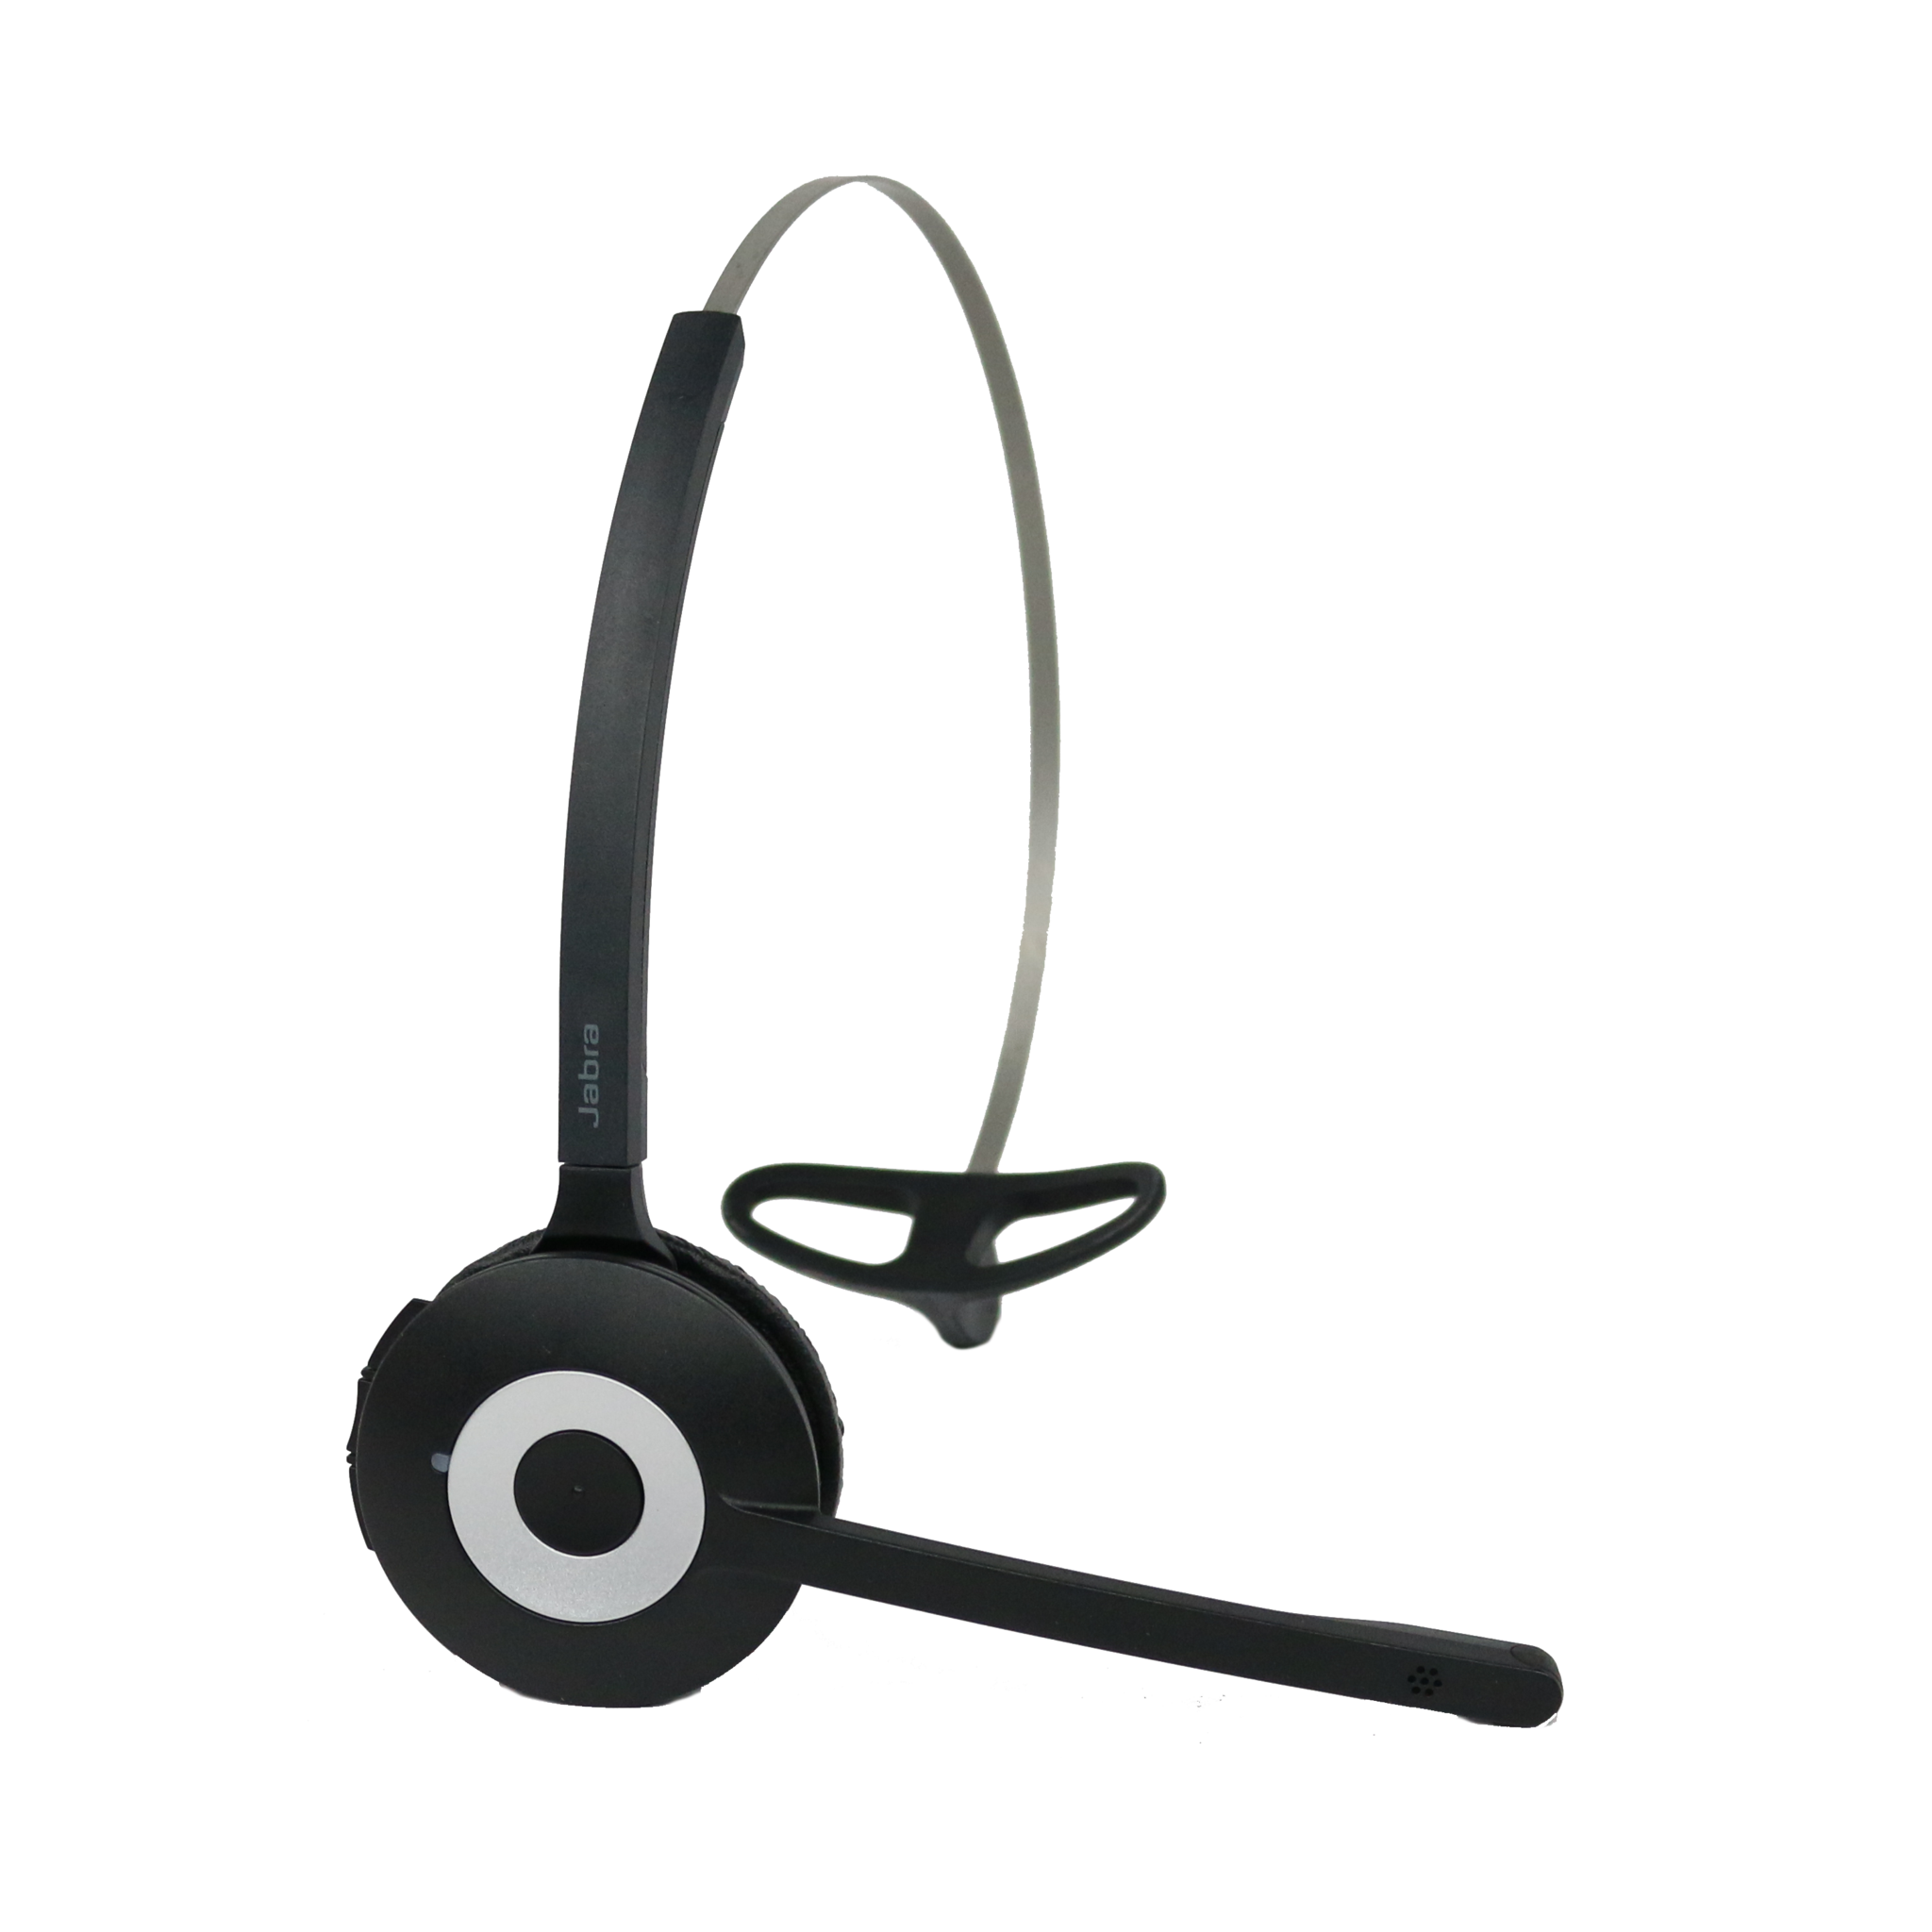 Jabra PRO 930 MONO USB Wireless Headset (Certified Renewed)